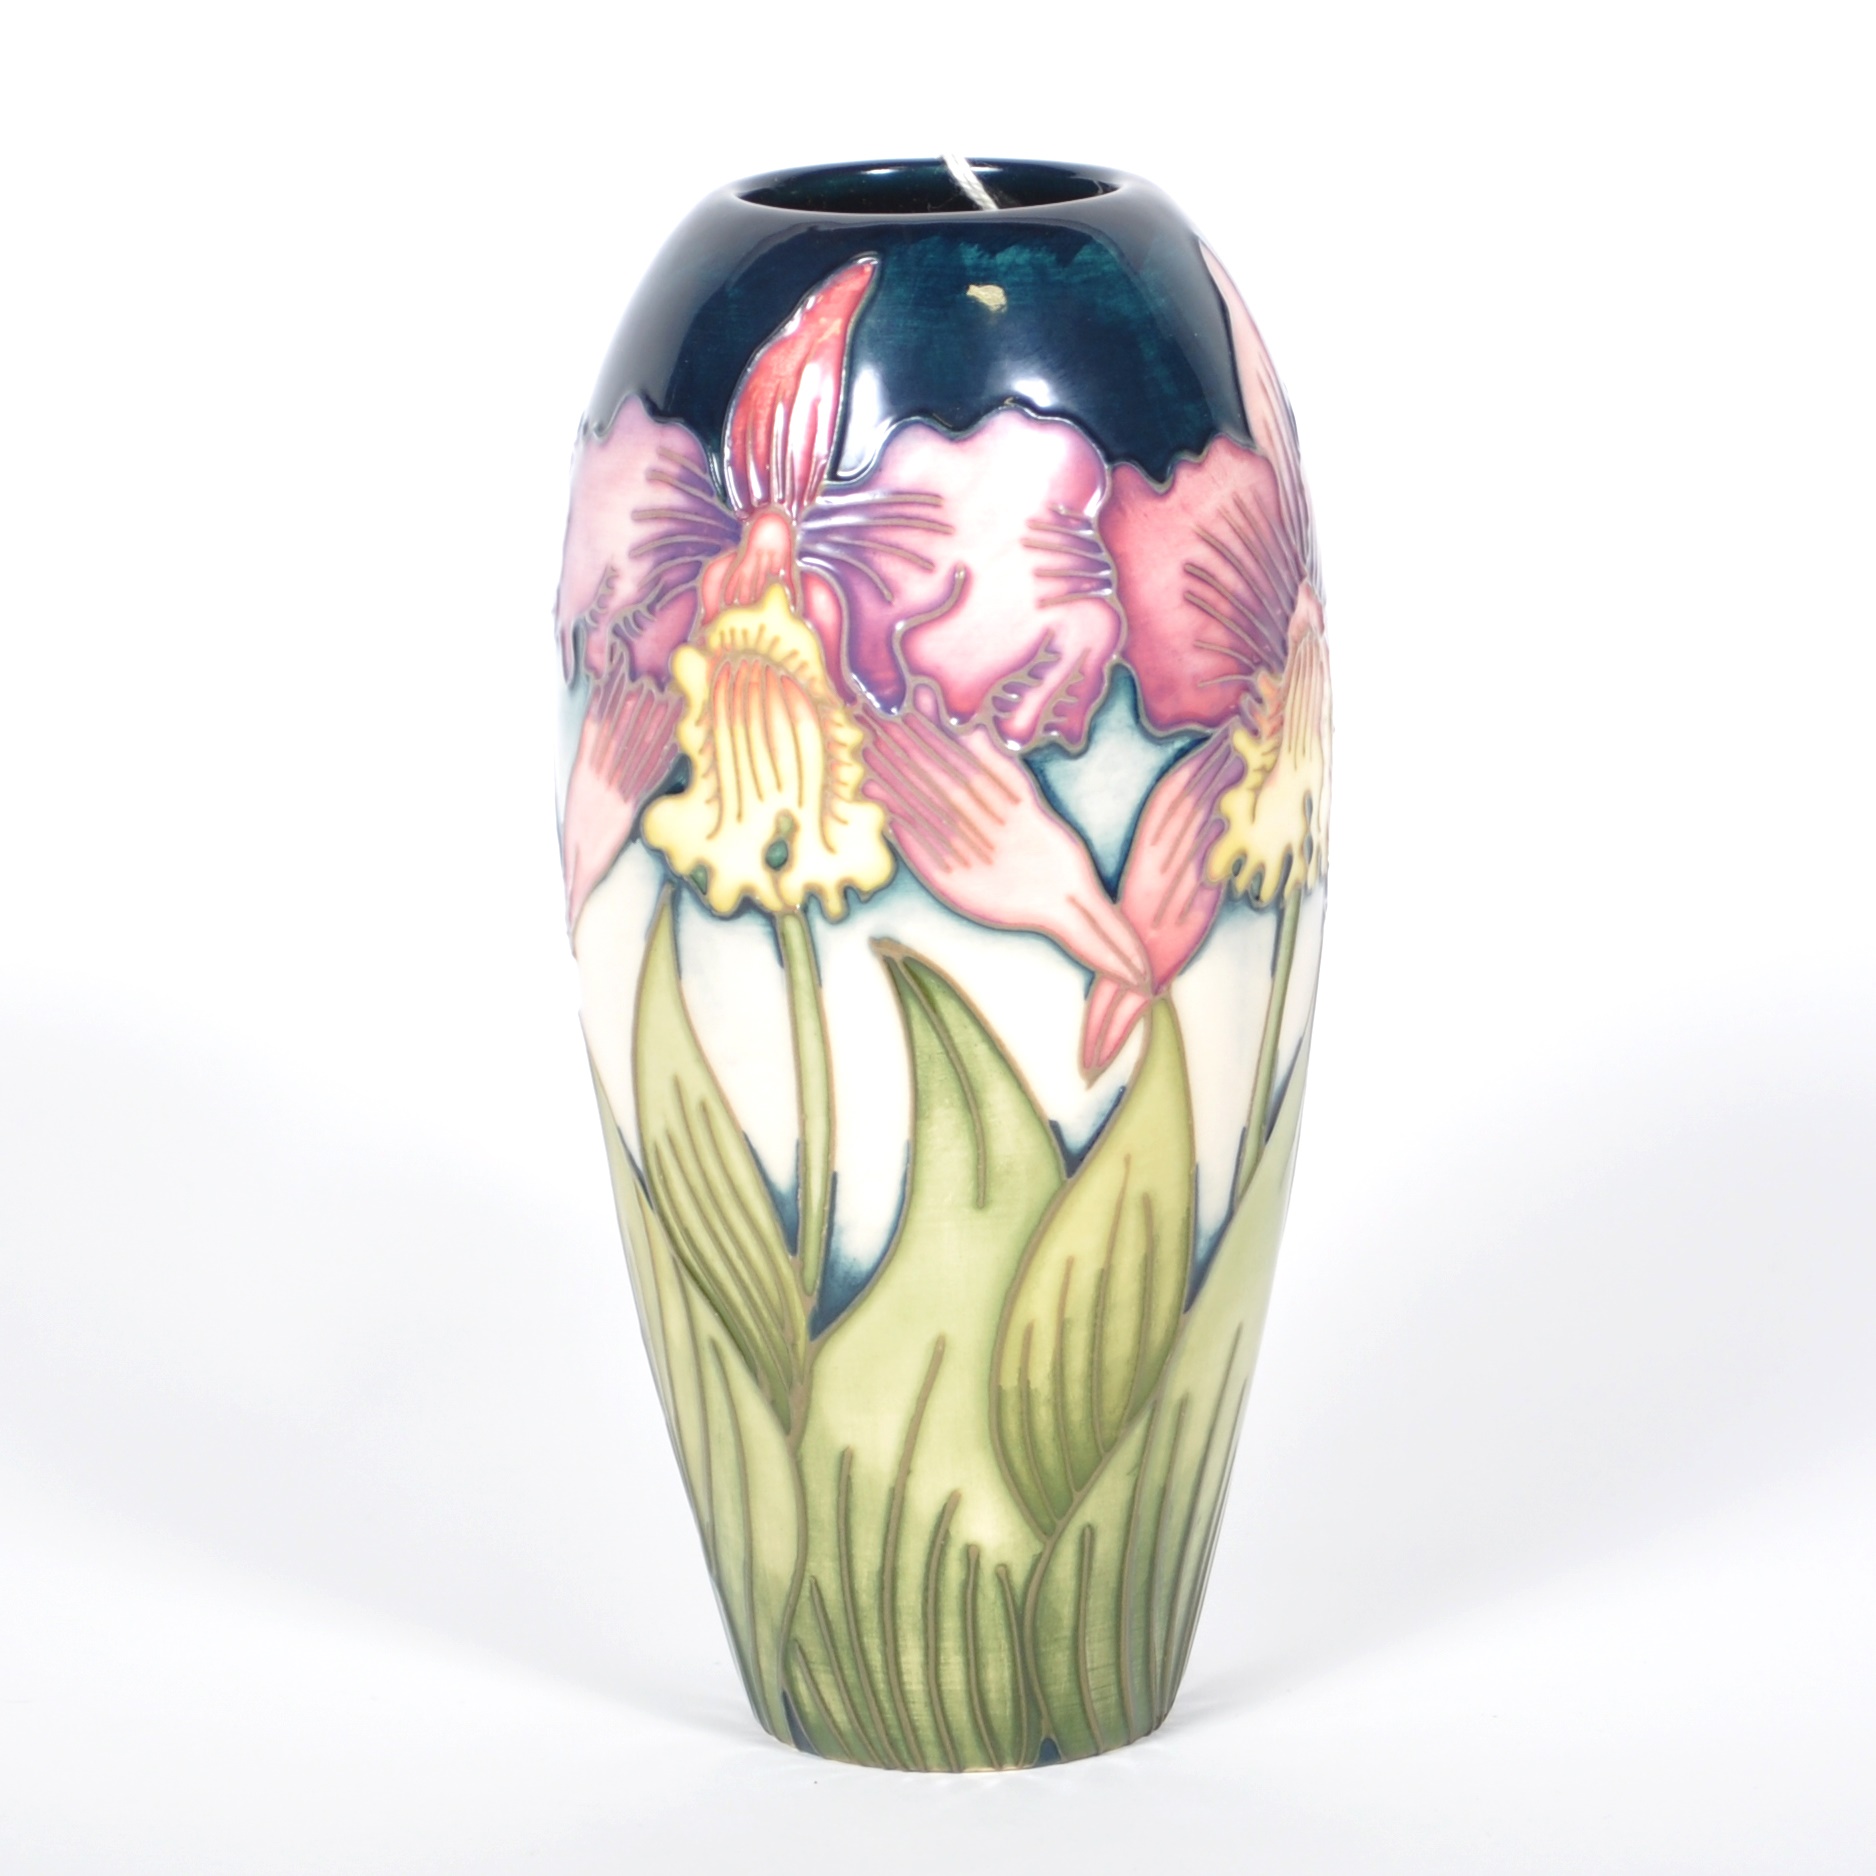 A Moorcroft Pottery vase, 'Orchid' designed by Nicola Slaney